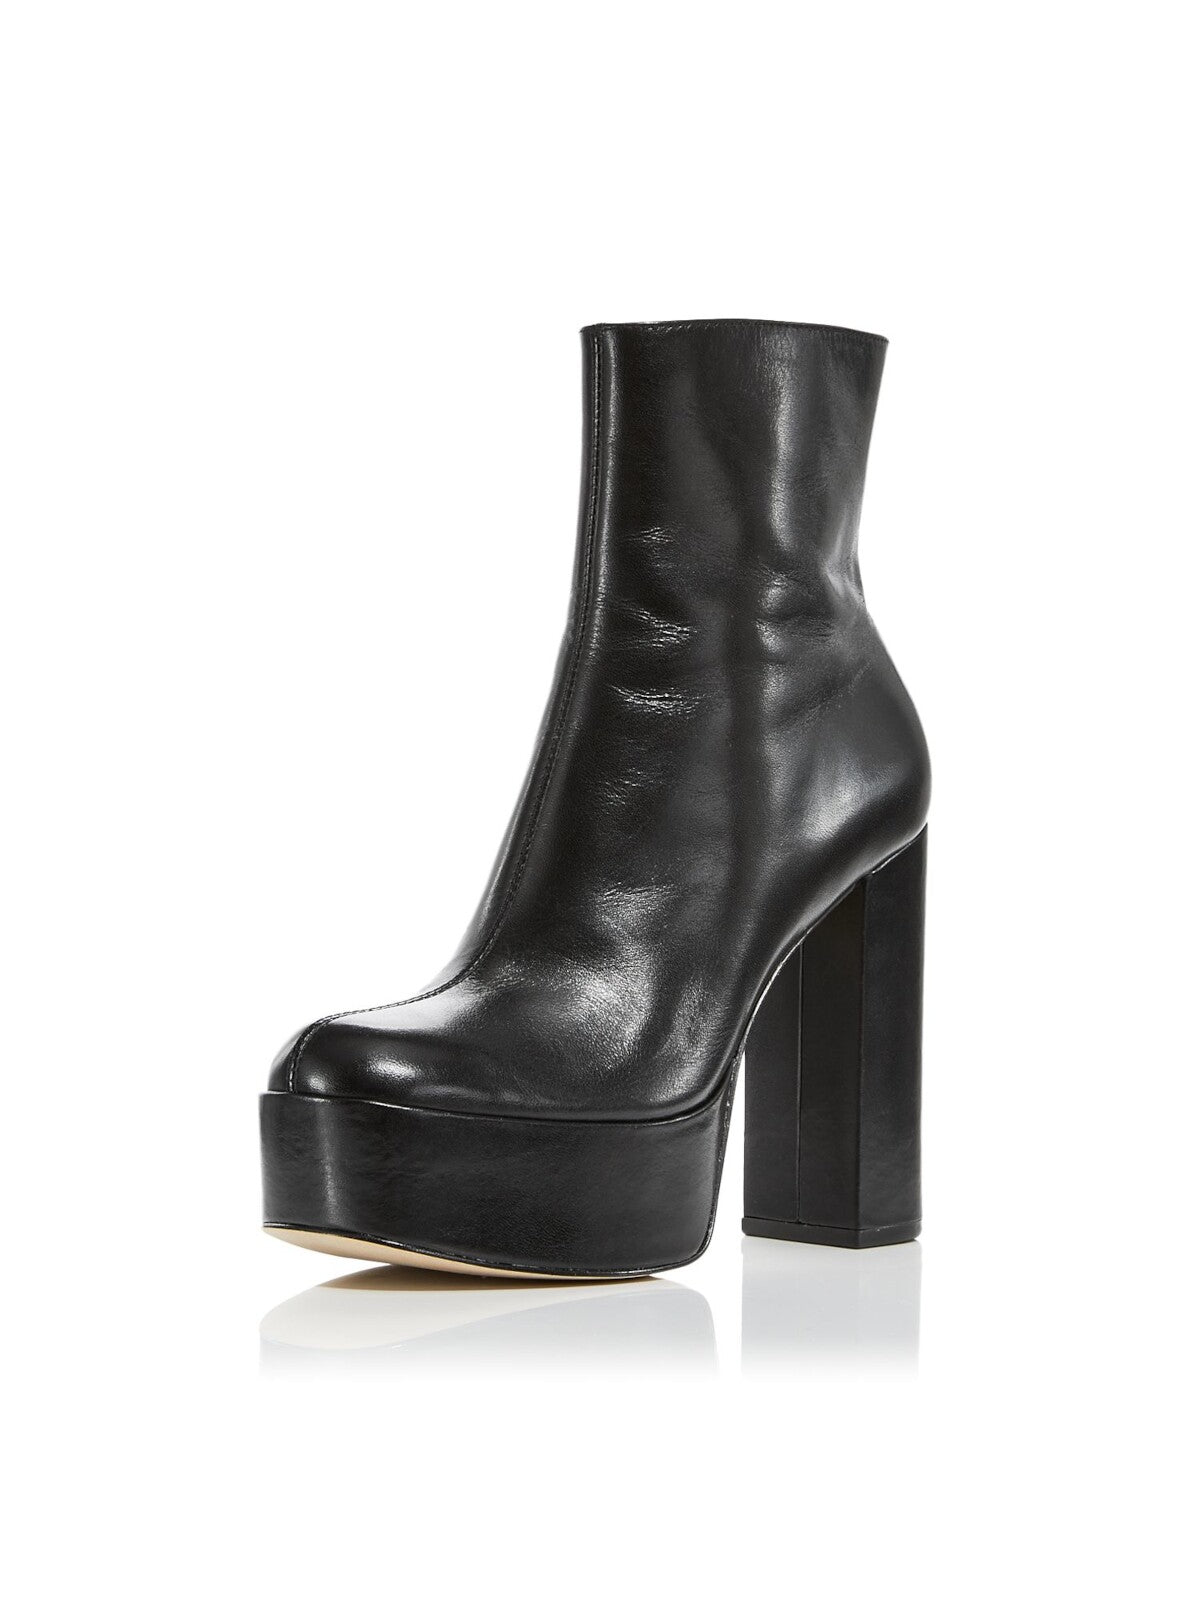 AQUA Womens Black 1" Platform Padded Penn Square Toe Block Heel Zip-Up Leather Dress Booties 10 M